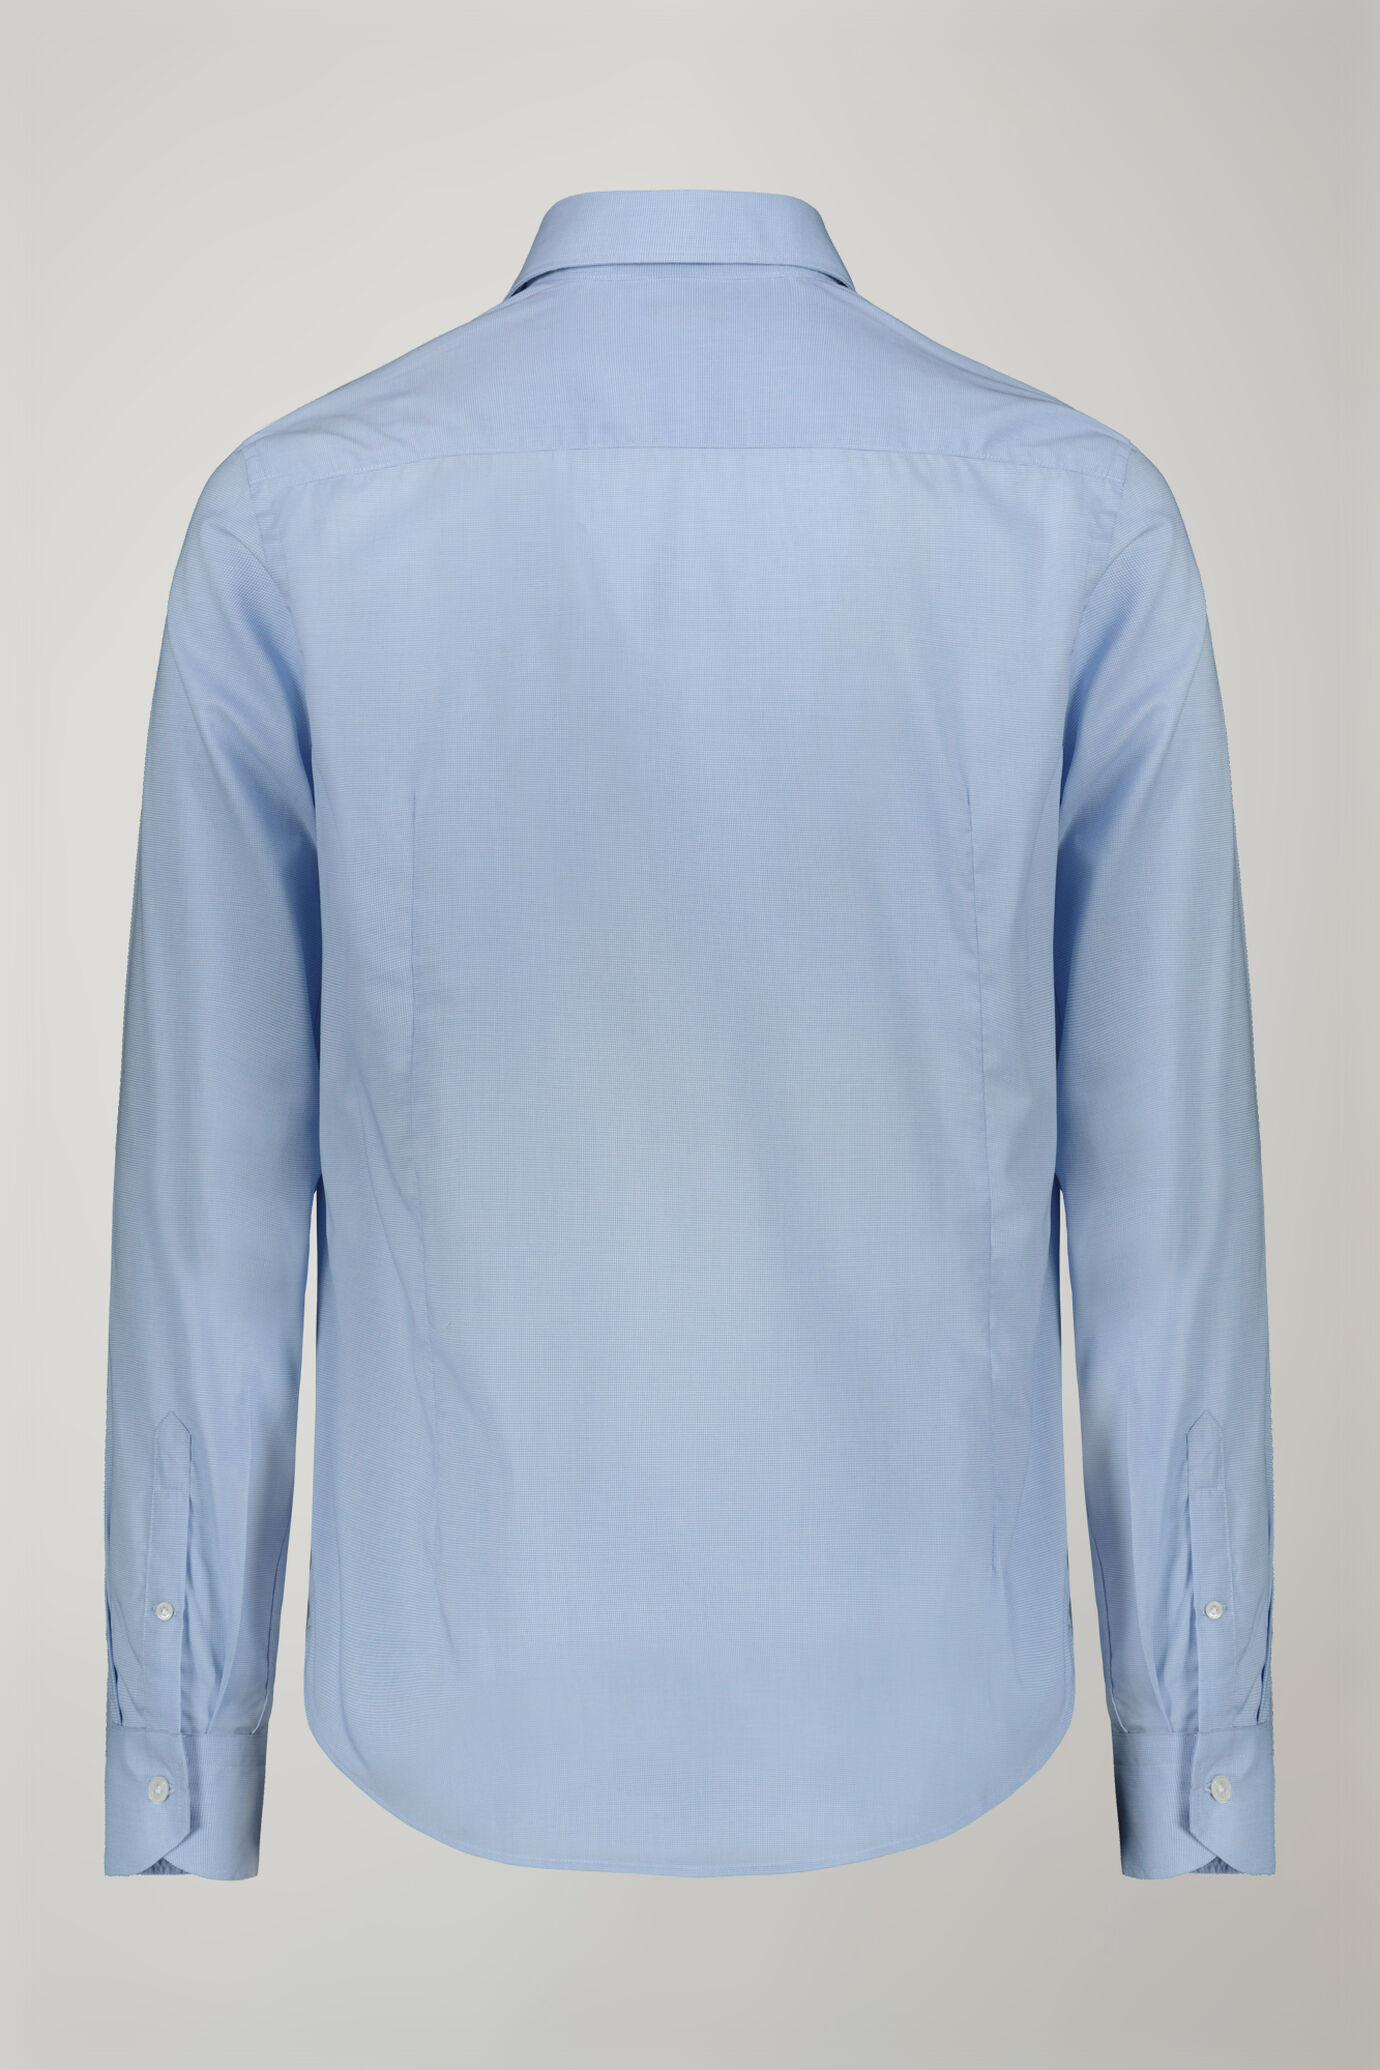 Men's shirt classic collar 100% cotton Pied De Poule Micro Fabric regular fit image number 6